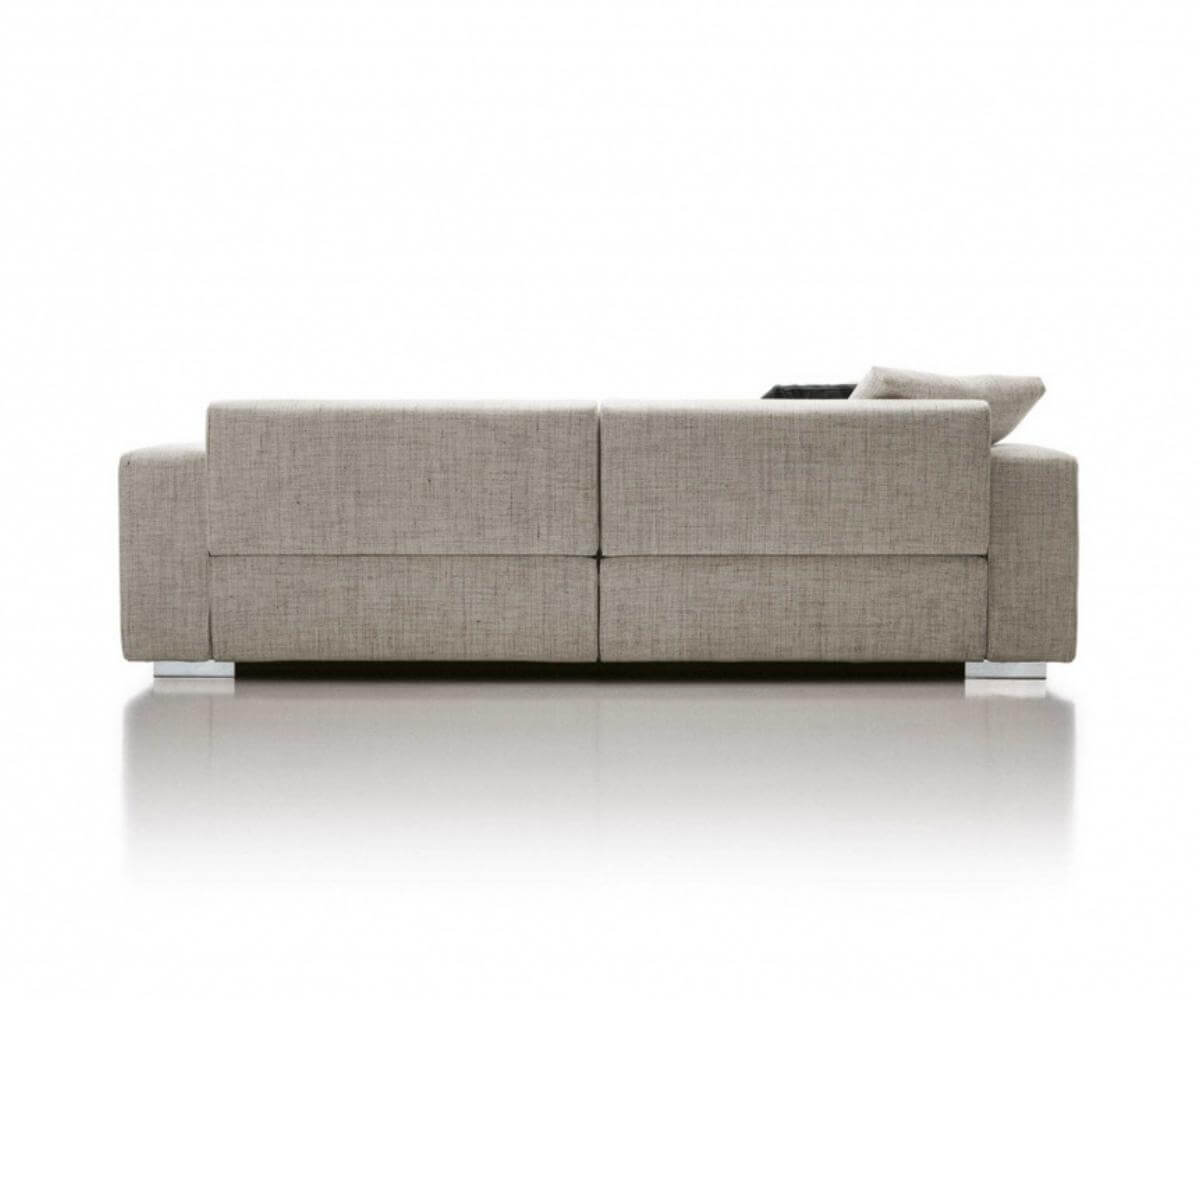 AvantGarde Cotton Linen Sofa: A Symbiosis of Art and Comfort